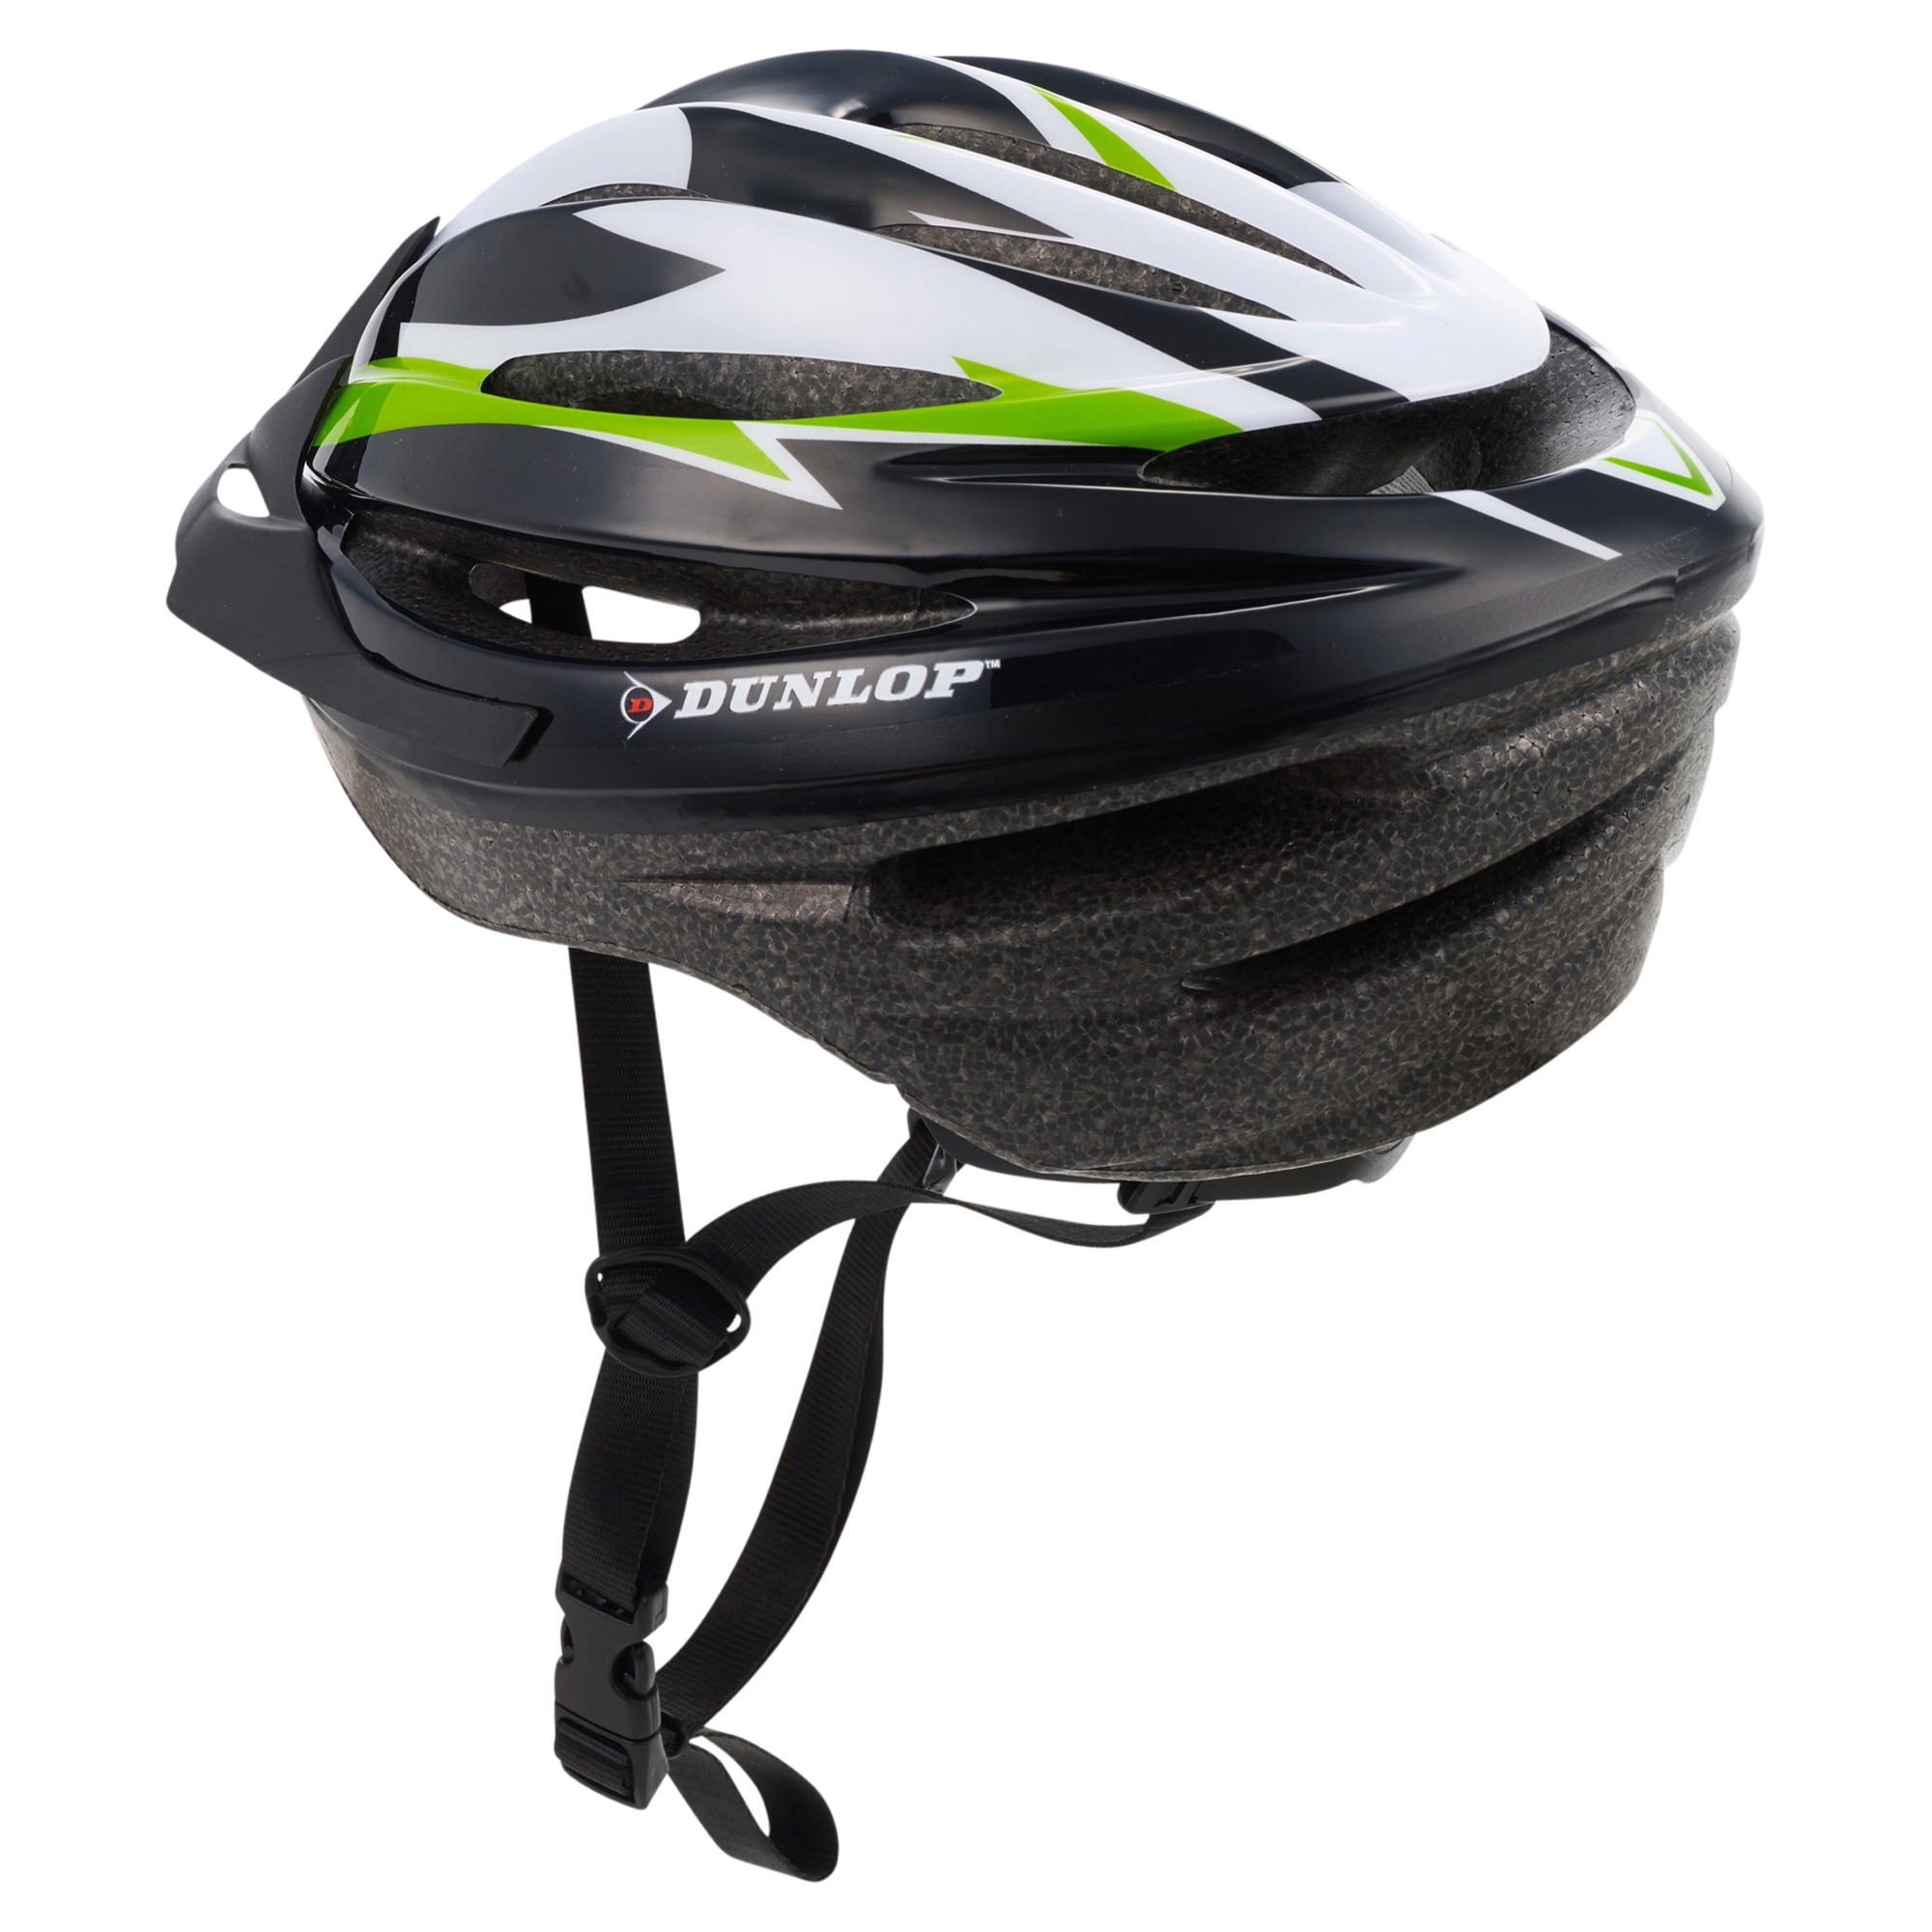 Dunlop Kids Bicycle Helmet Protective Gear Scooter Adjustable 48-54cm New 